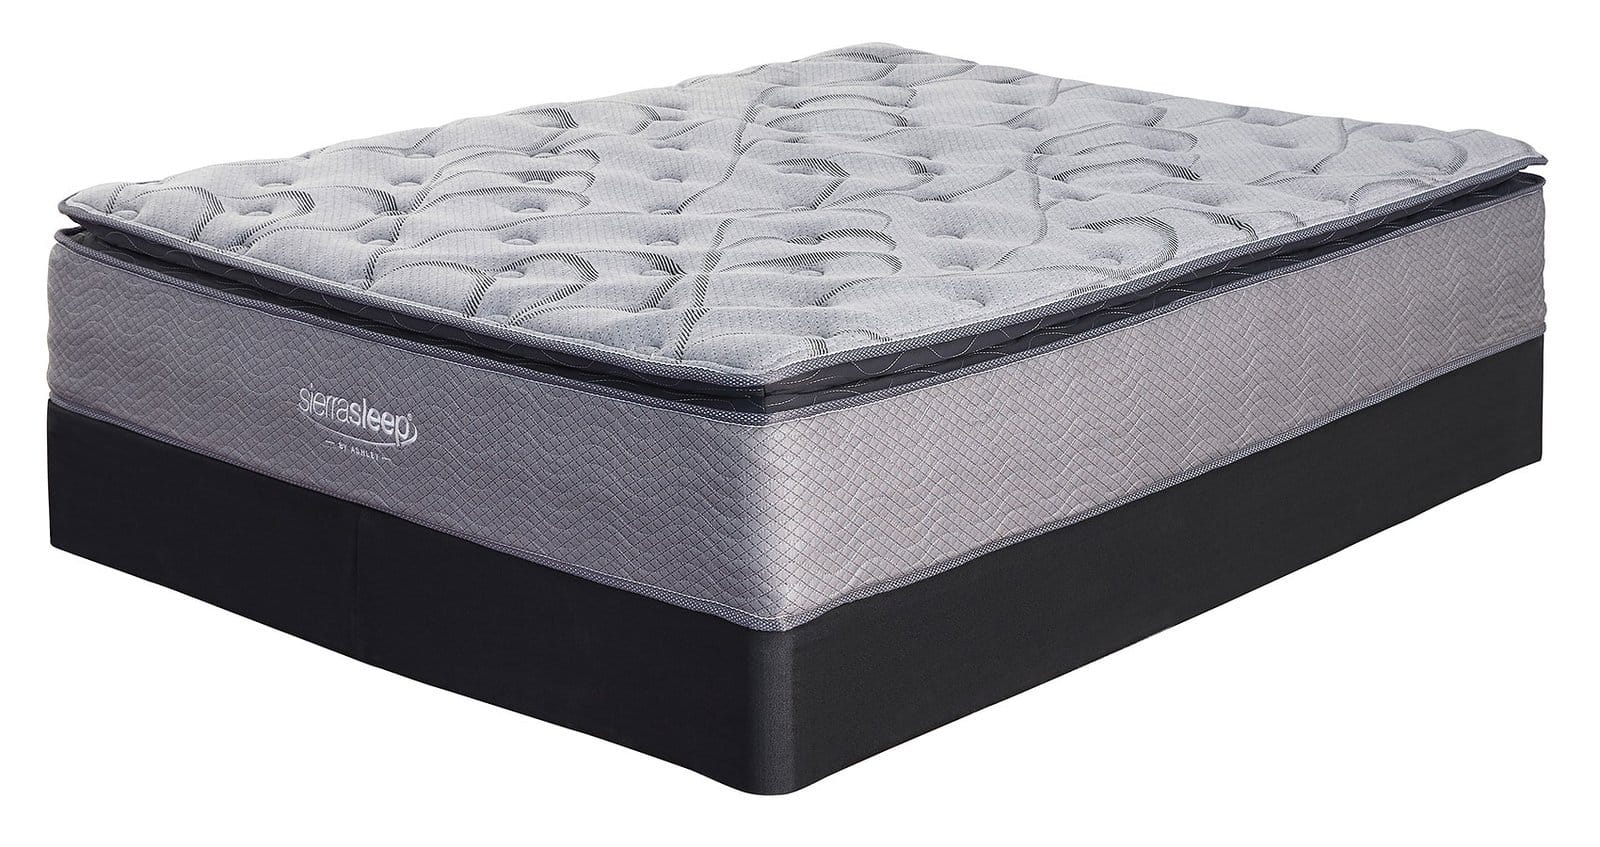 ashley sleep curacao queen mattress